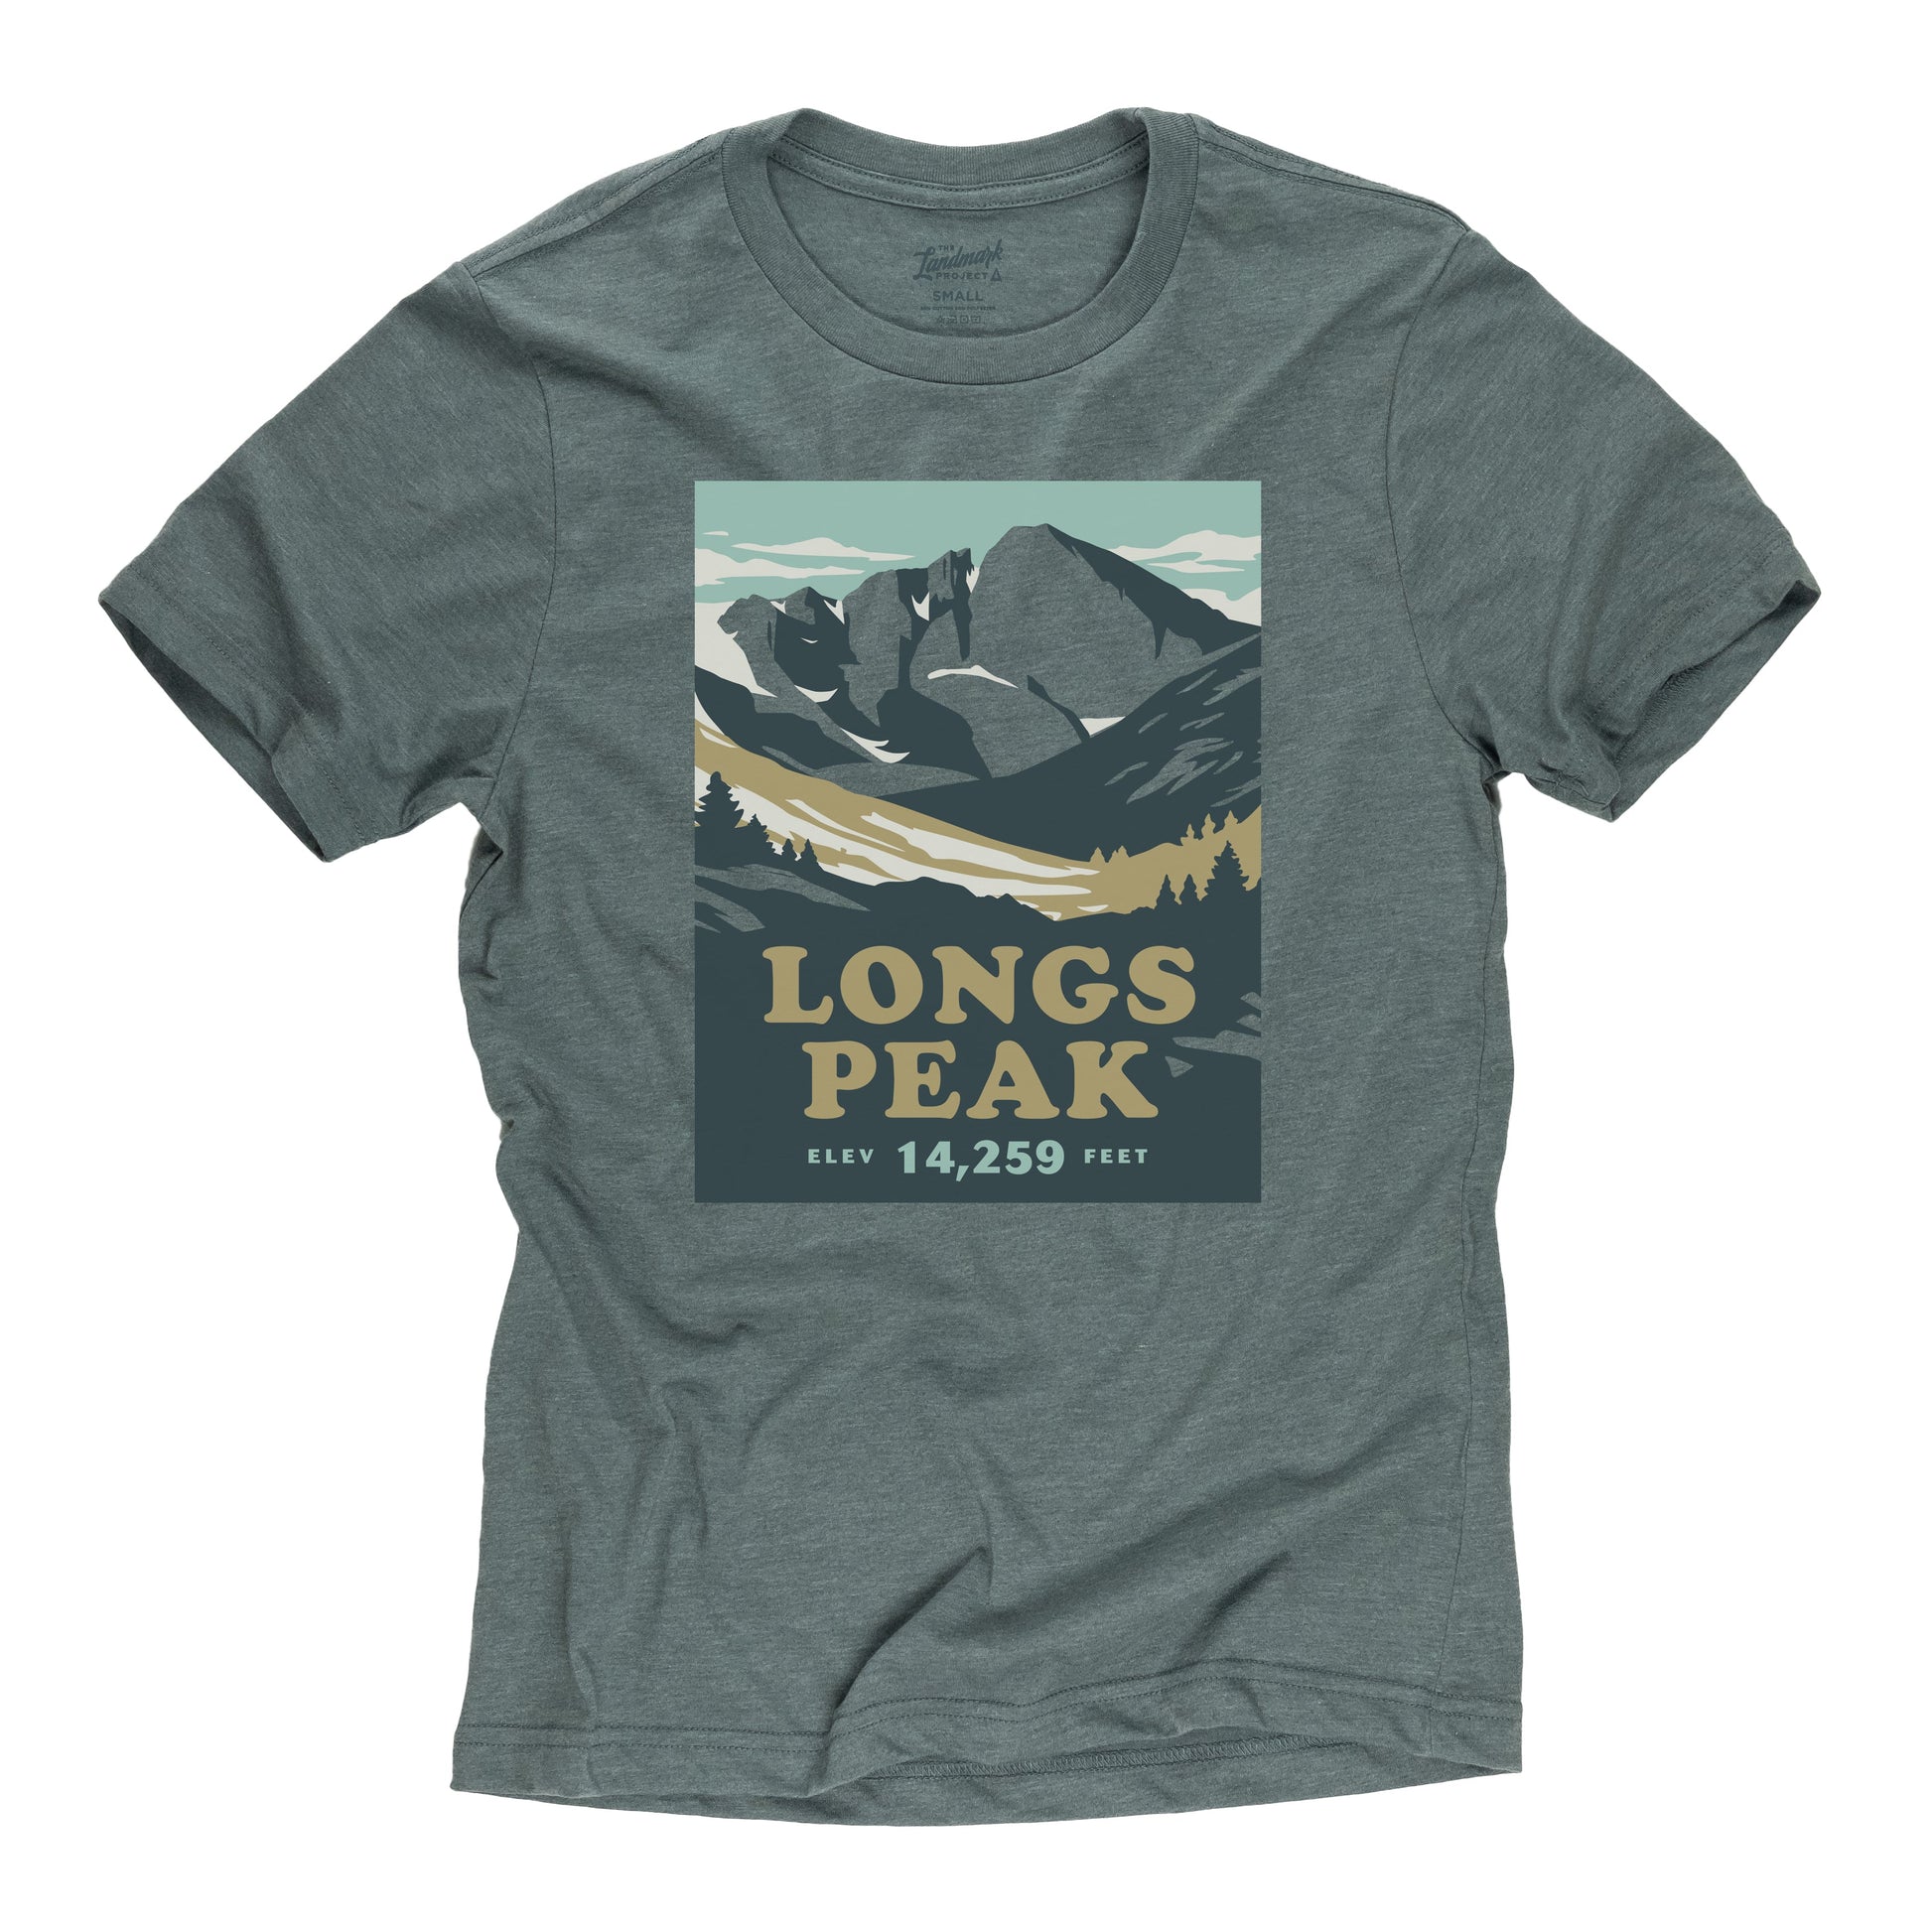 Longs Peak t-shirt in manatee